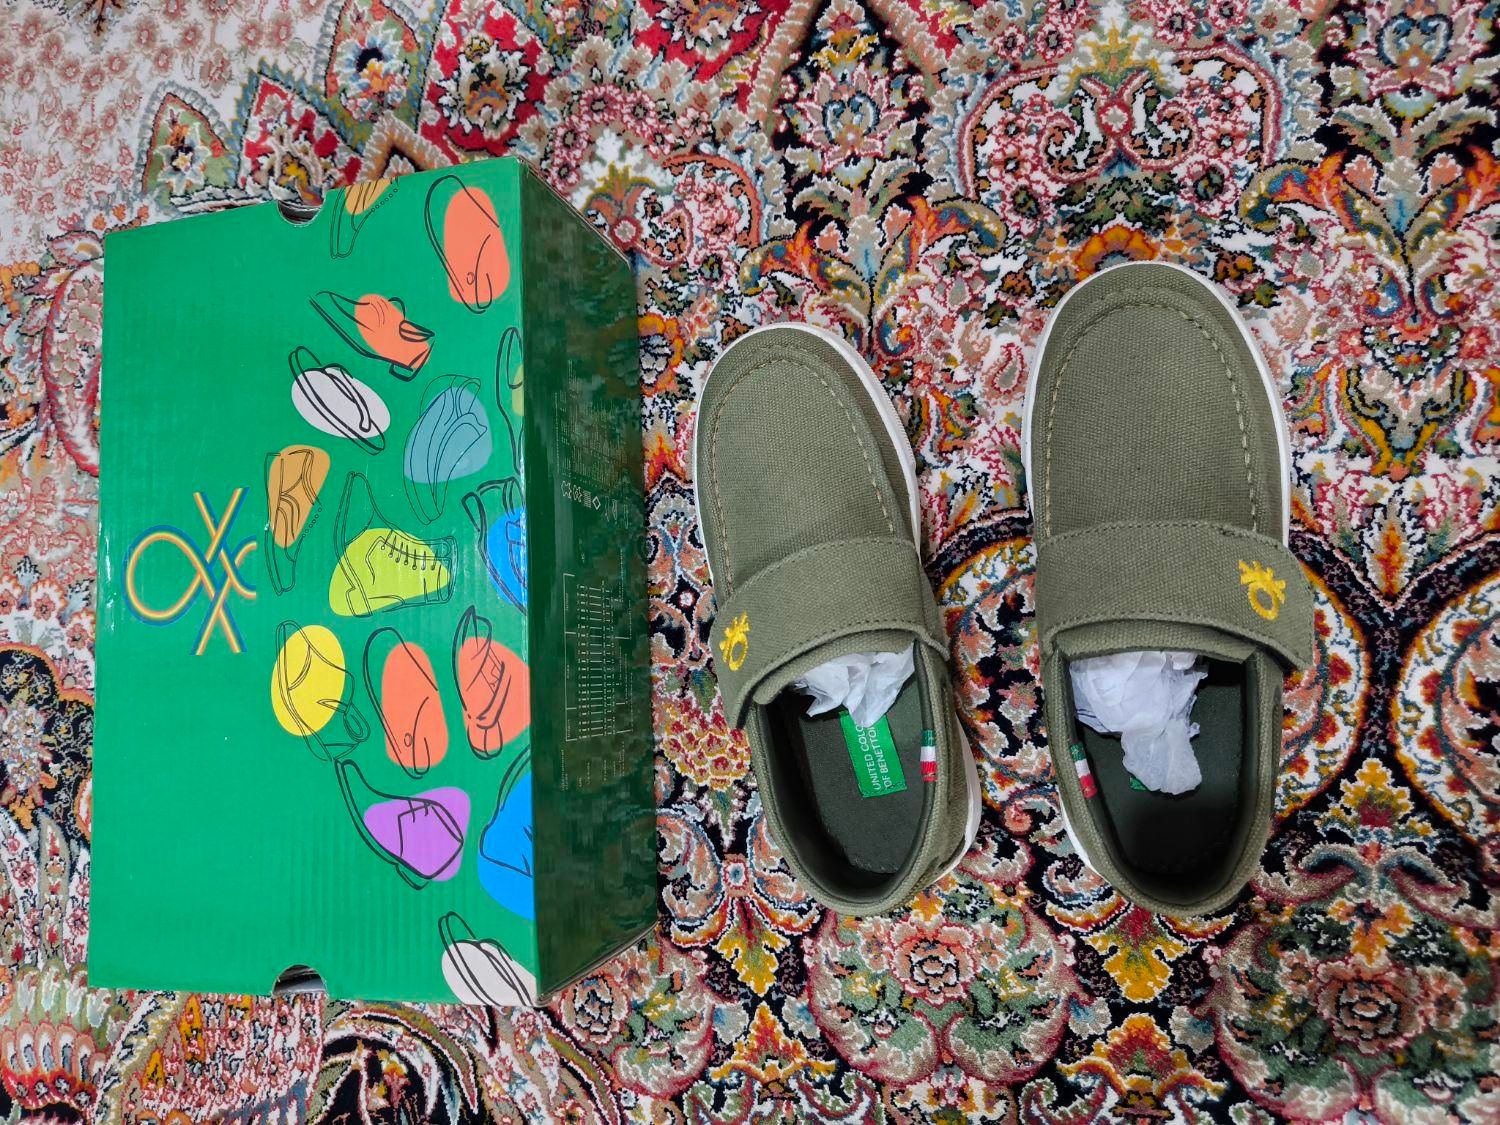 کفش پسرانه سایز ۲۹|کفش و لباس بچه|تهران, قیام|دیوار